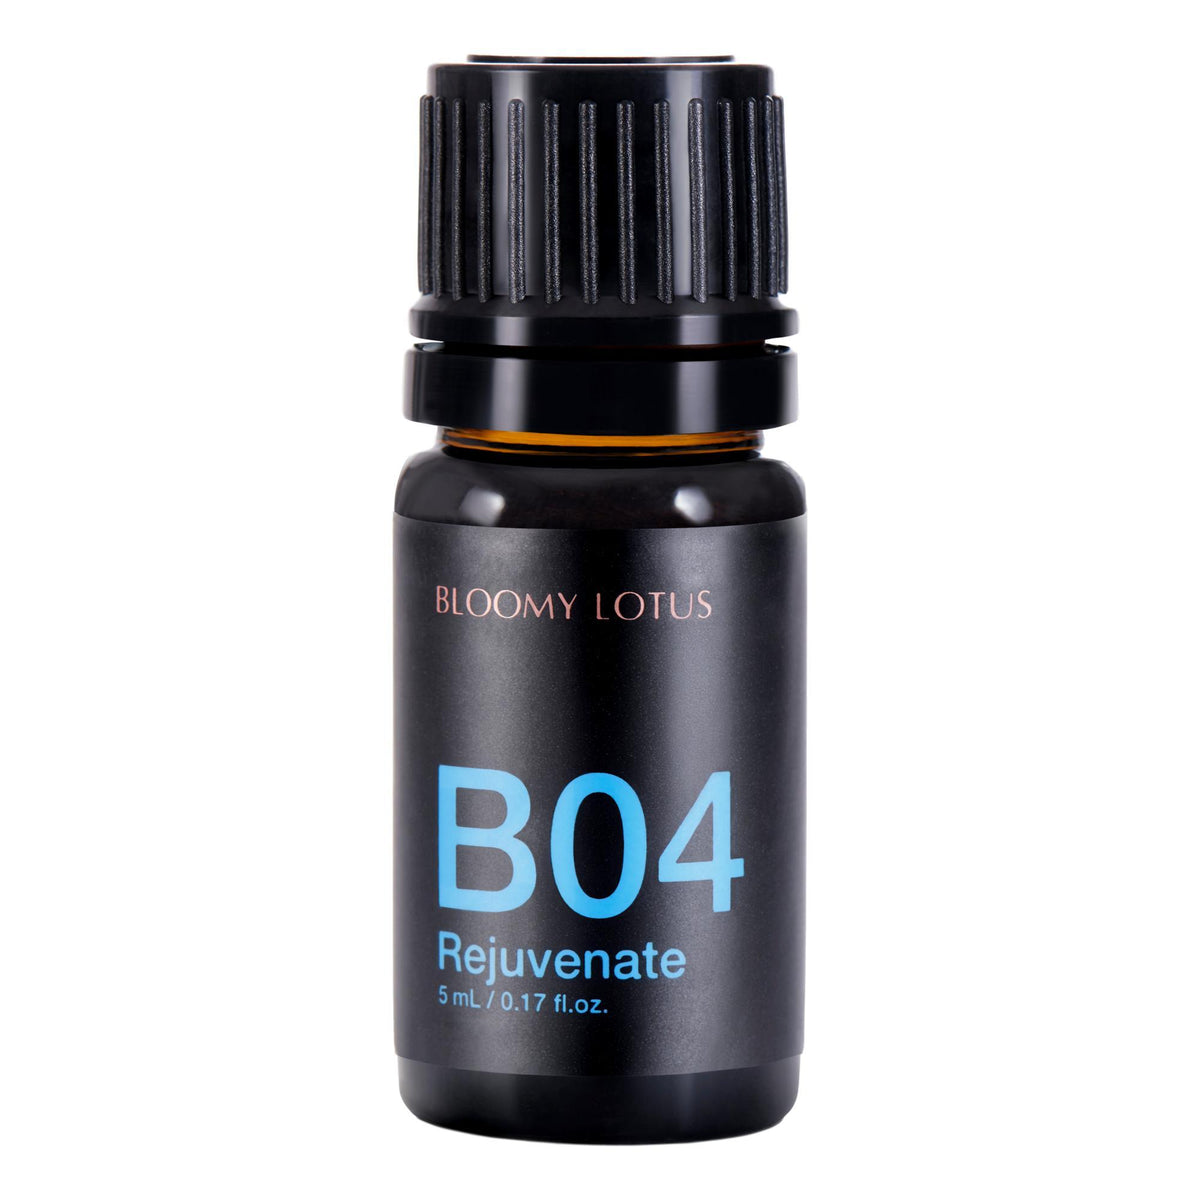 Bloomy Lotus B04 Rejuvenate Essential Oil, 5 ml